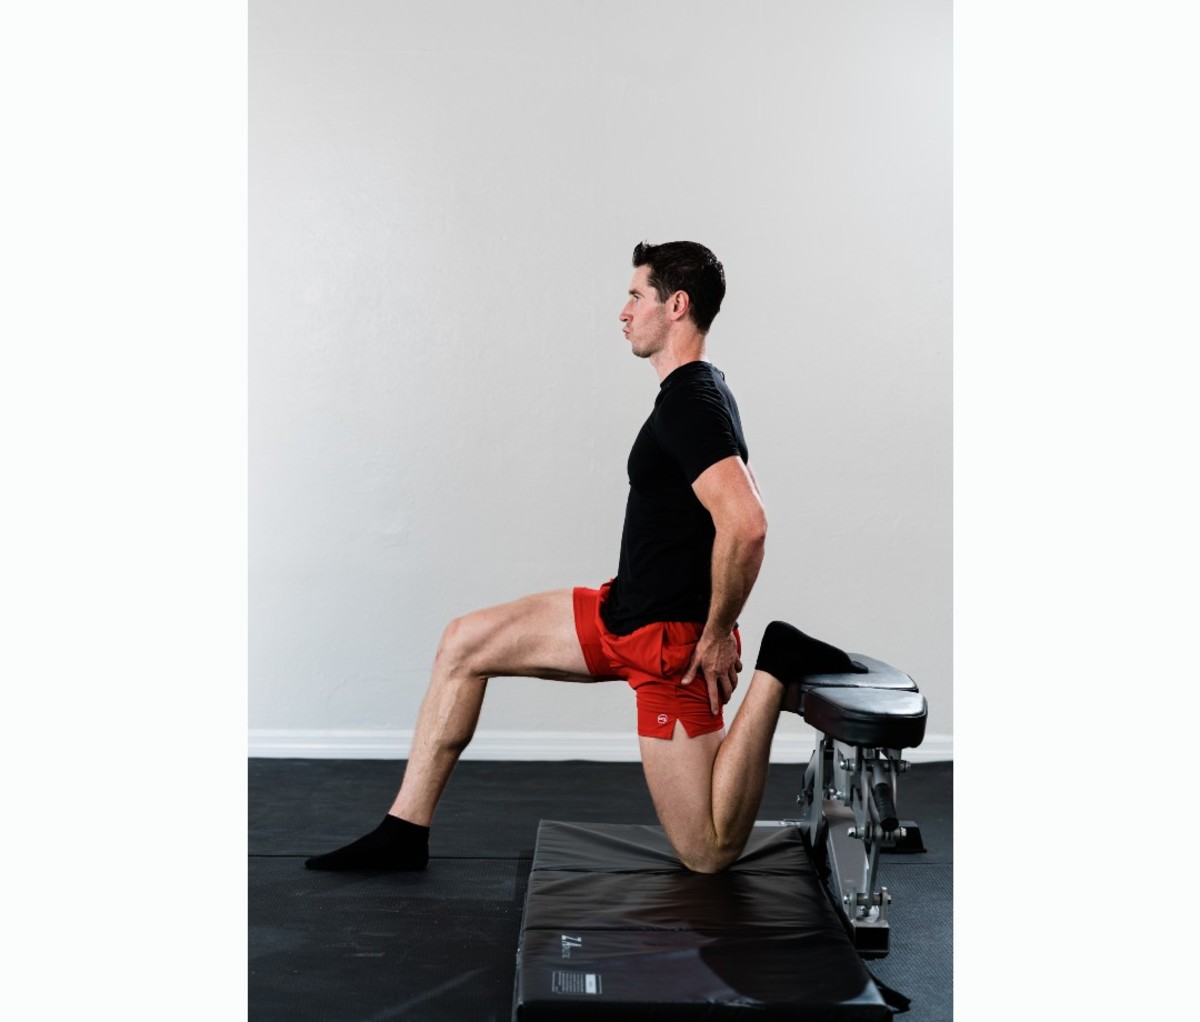 Rearfoot-elevated hip flexor stretch